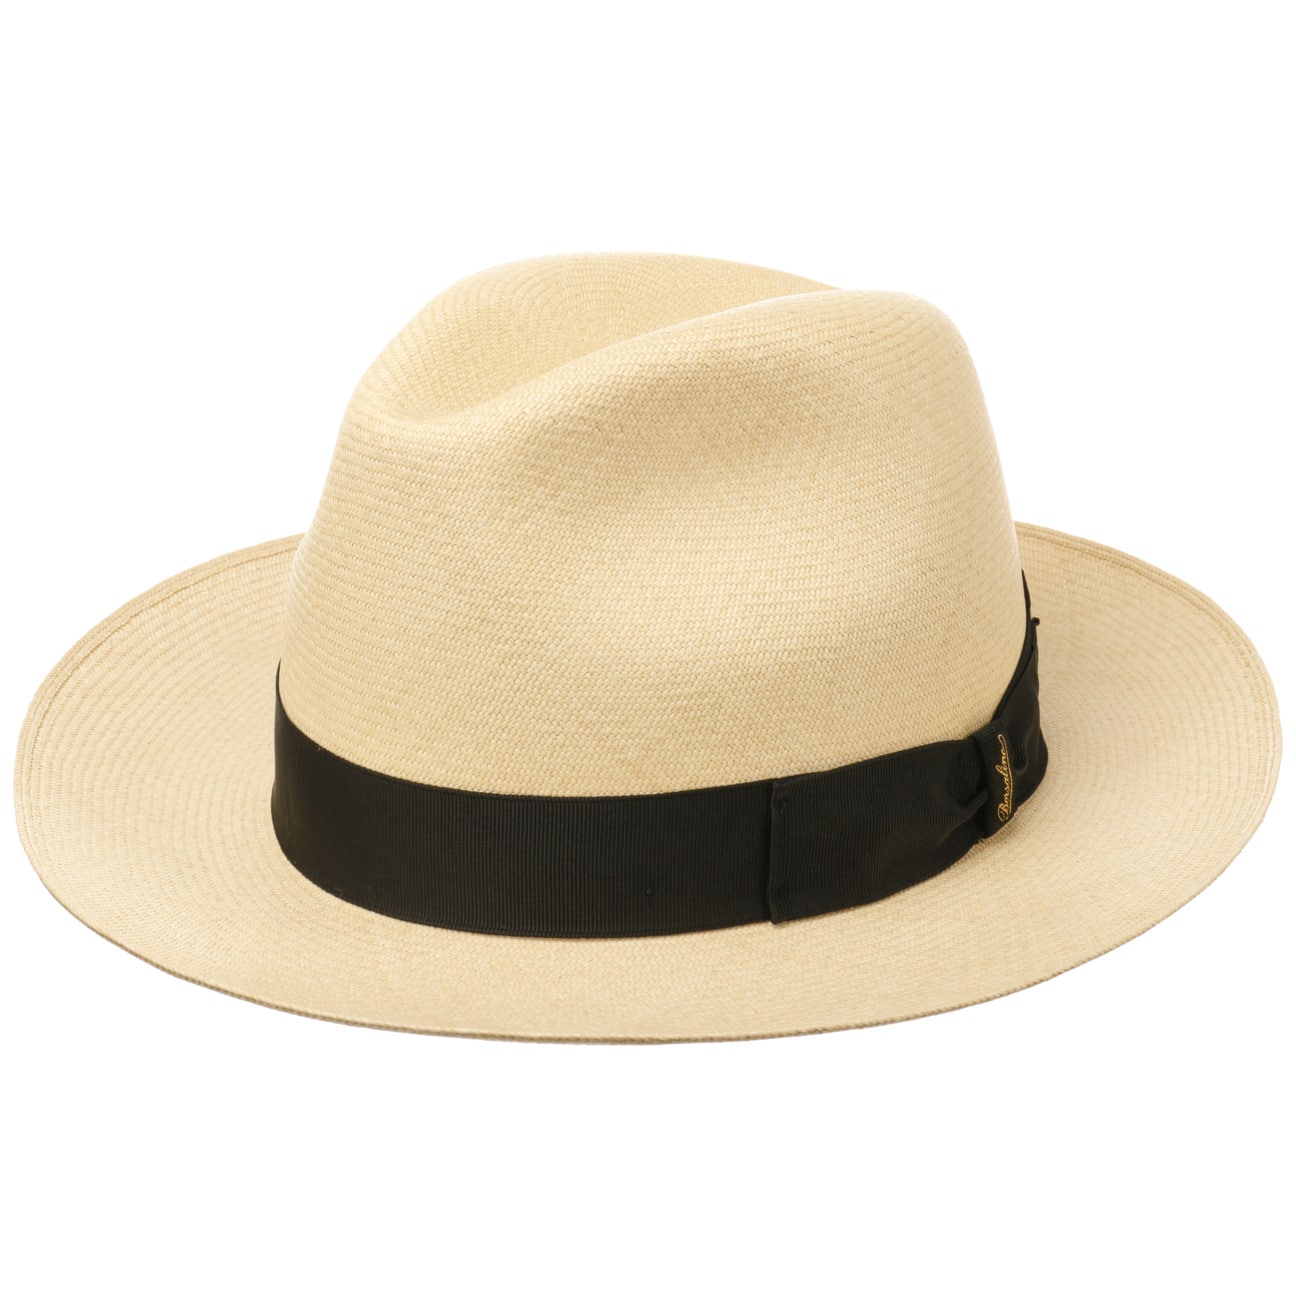 Borsalino Panama Bogart Hat Premium, EUR 999,00 --> Hats, caps ...